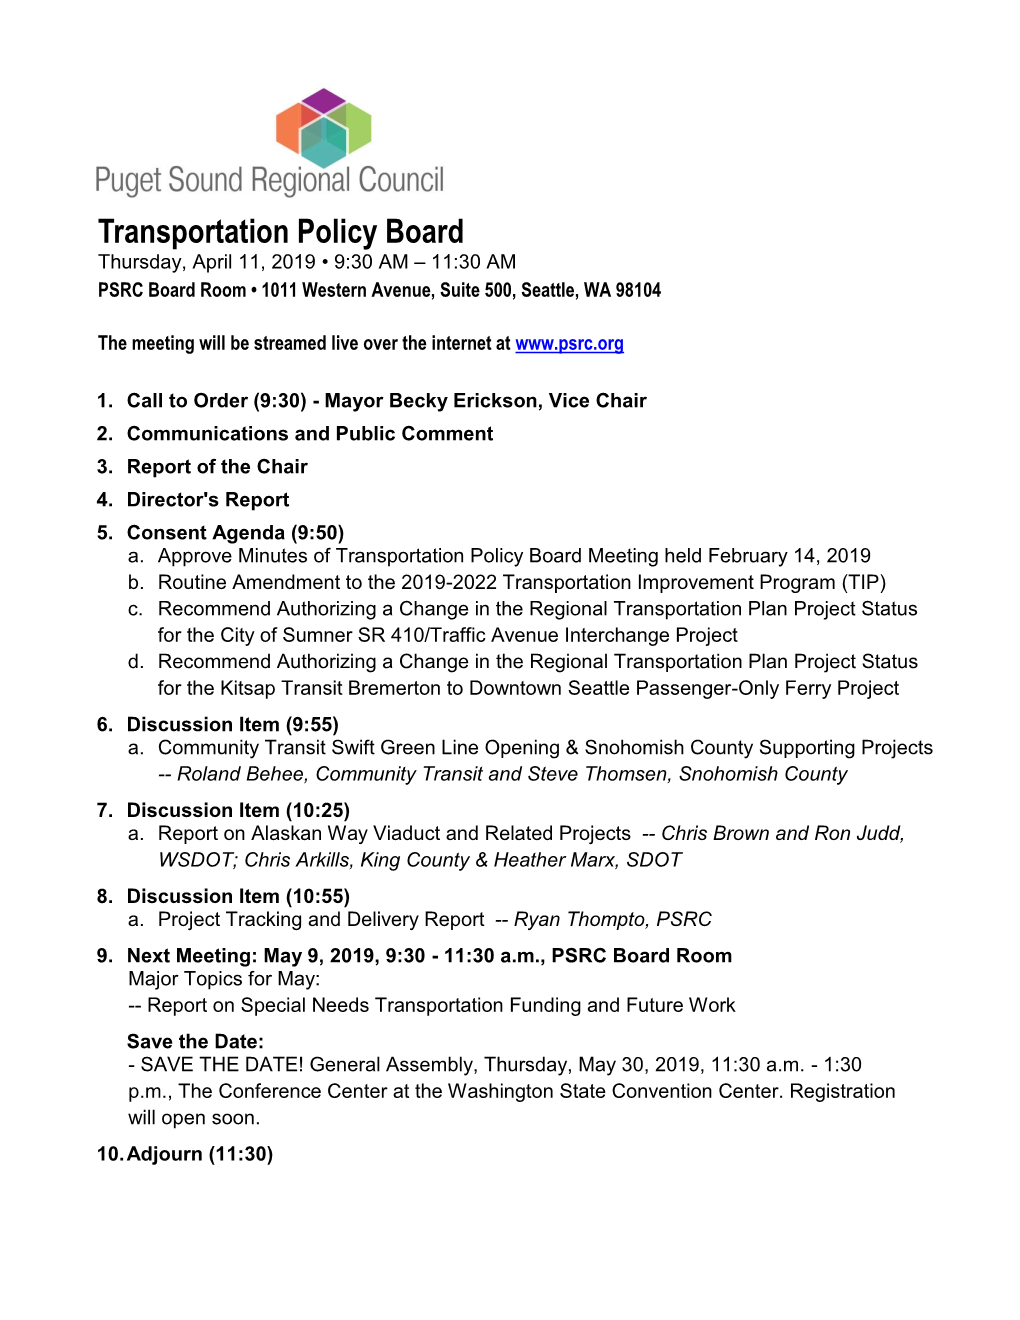 Transportation Policy Board Agenda